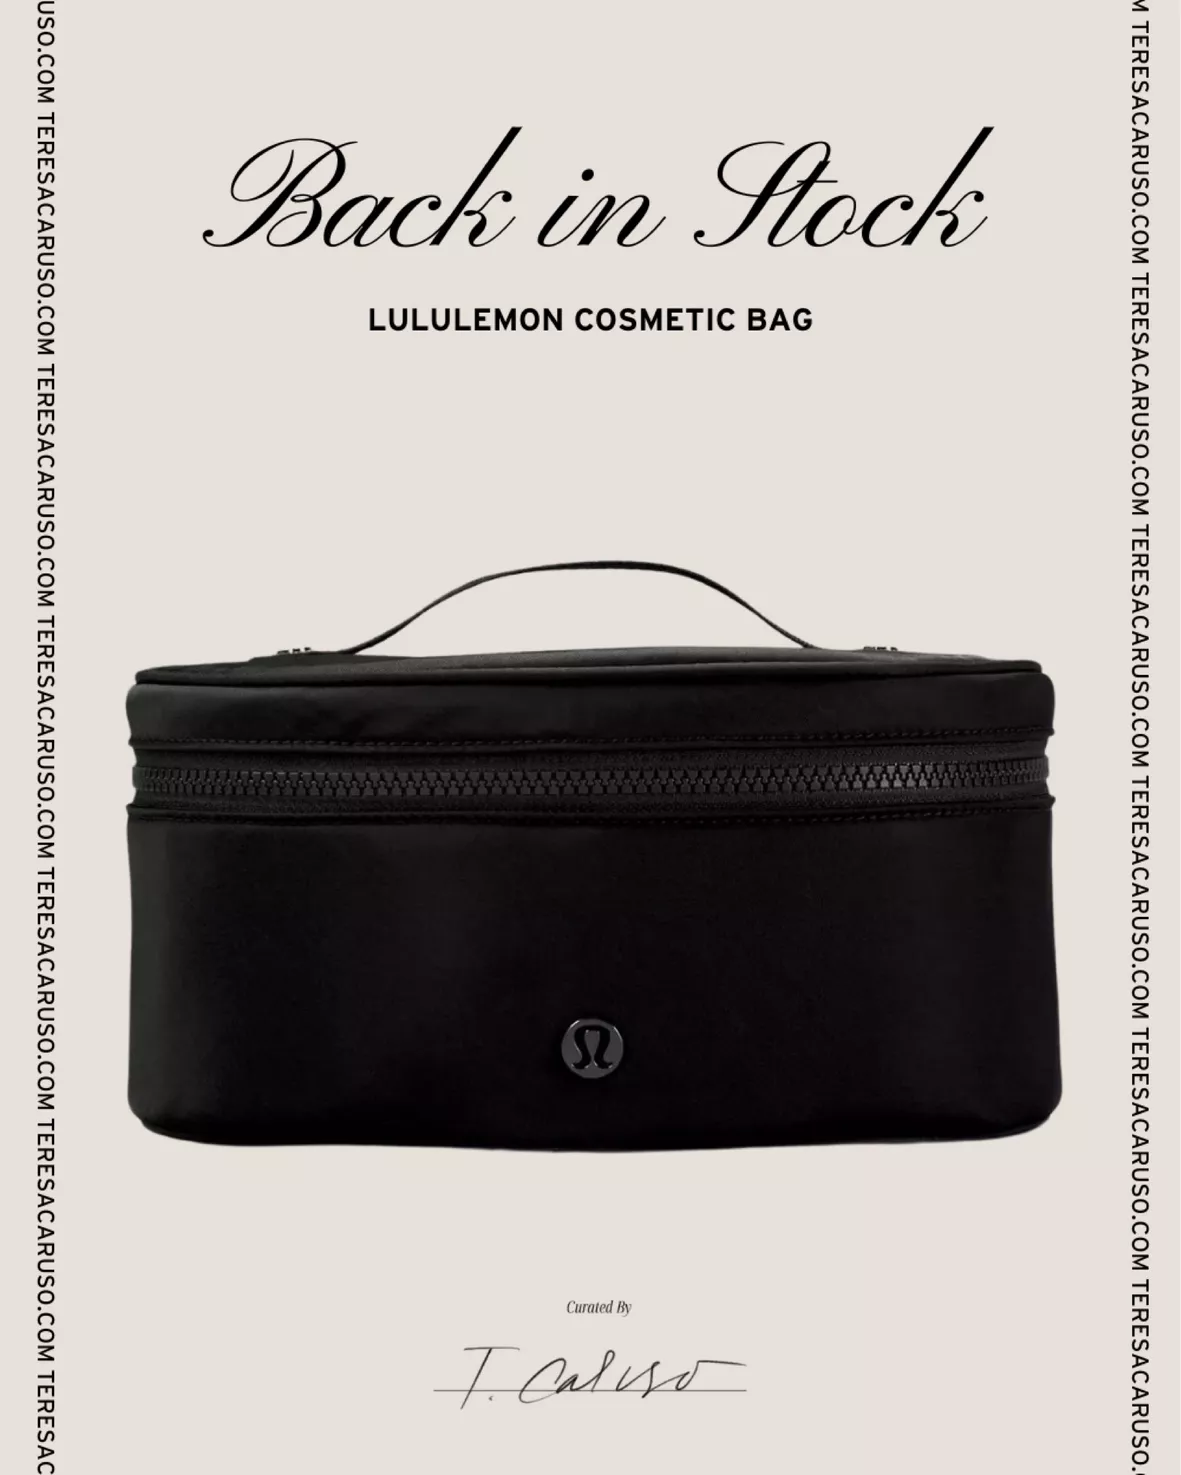 Black Oval Makeup Cosmetic Bag